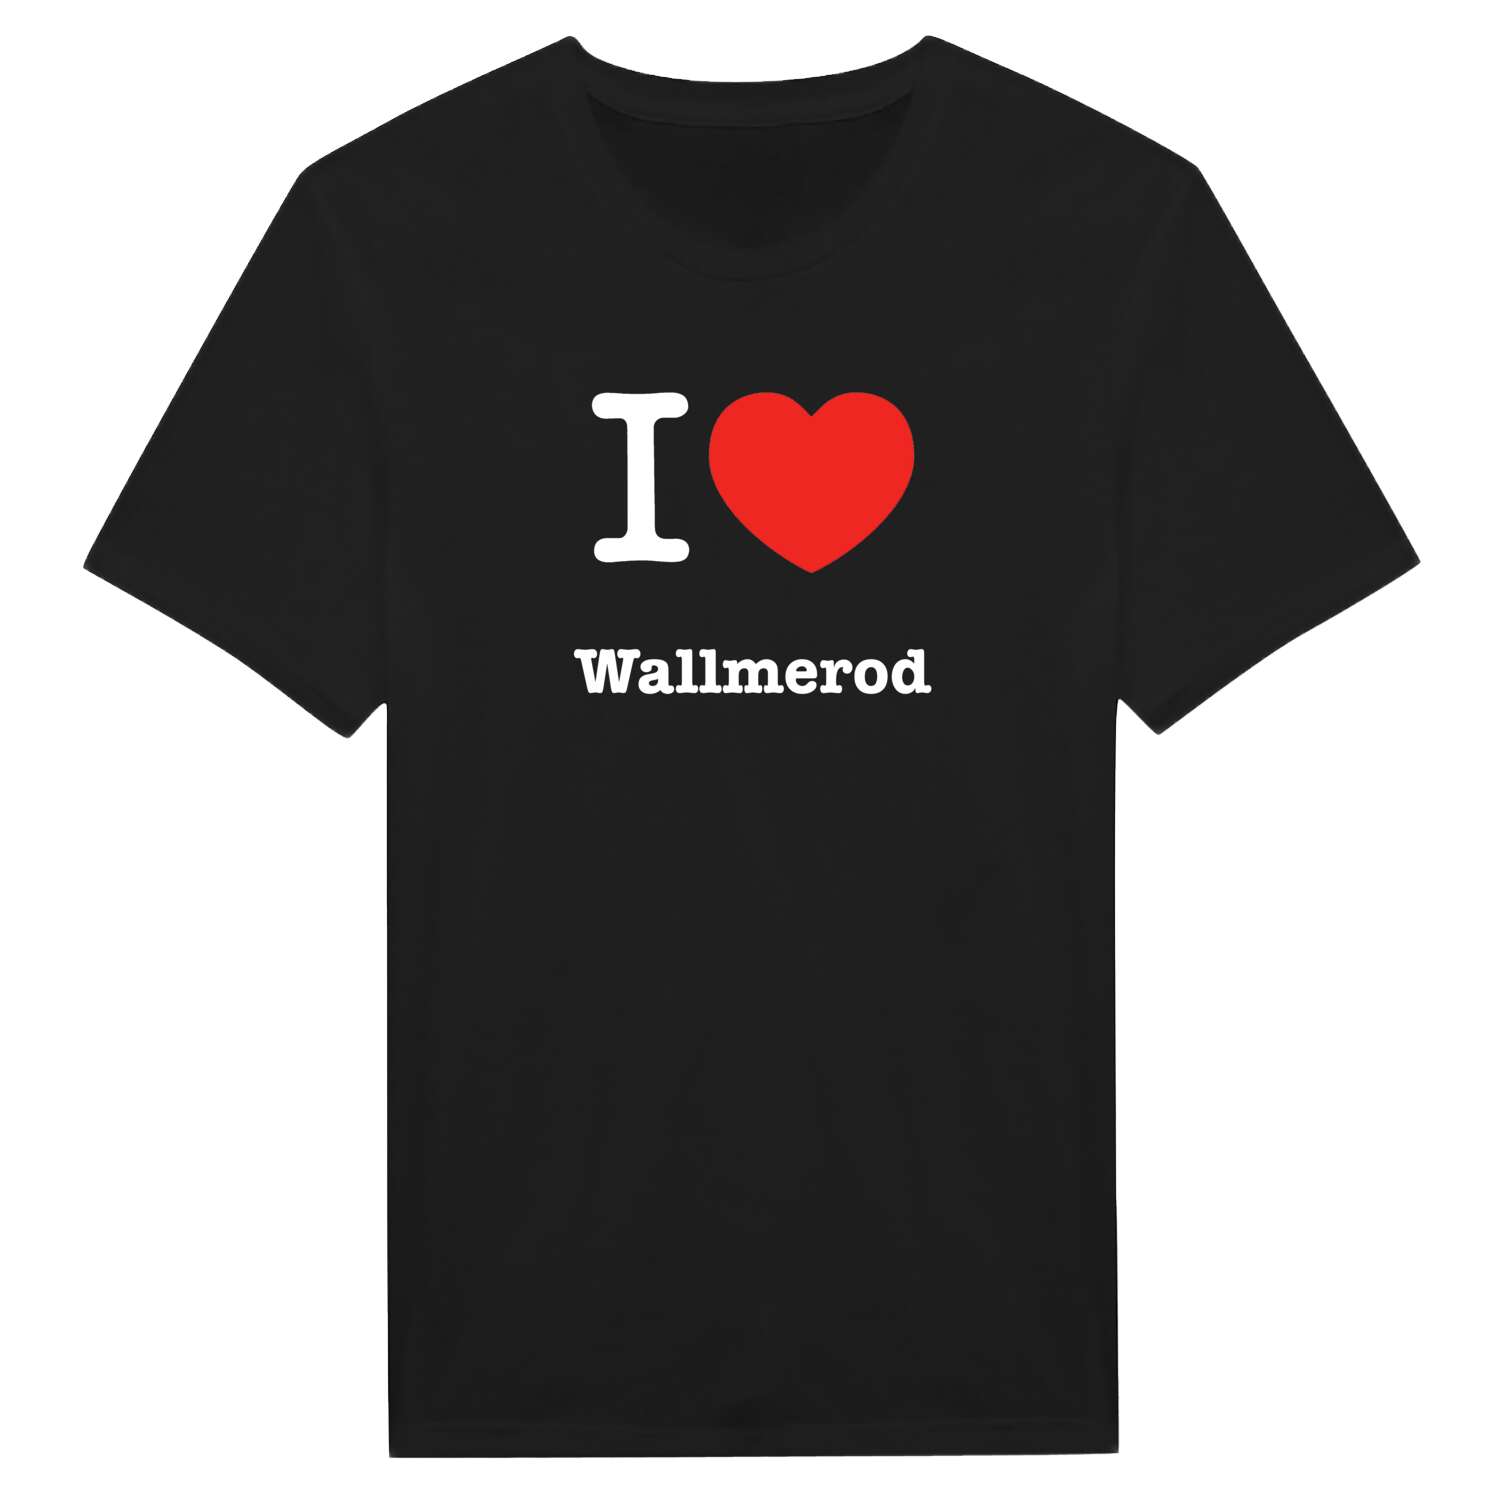 Wallmerod T-Shirt »I love«